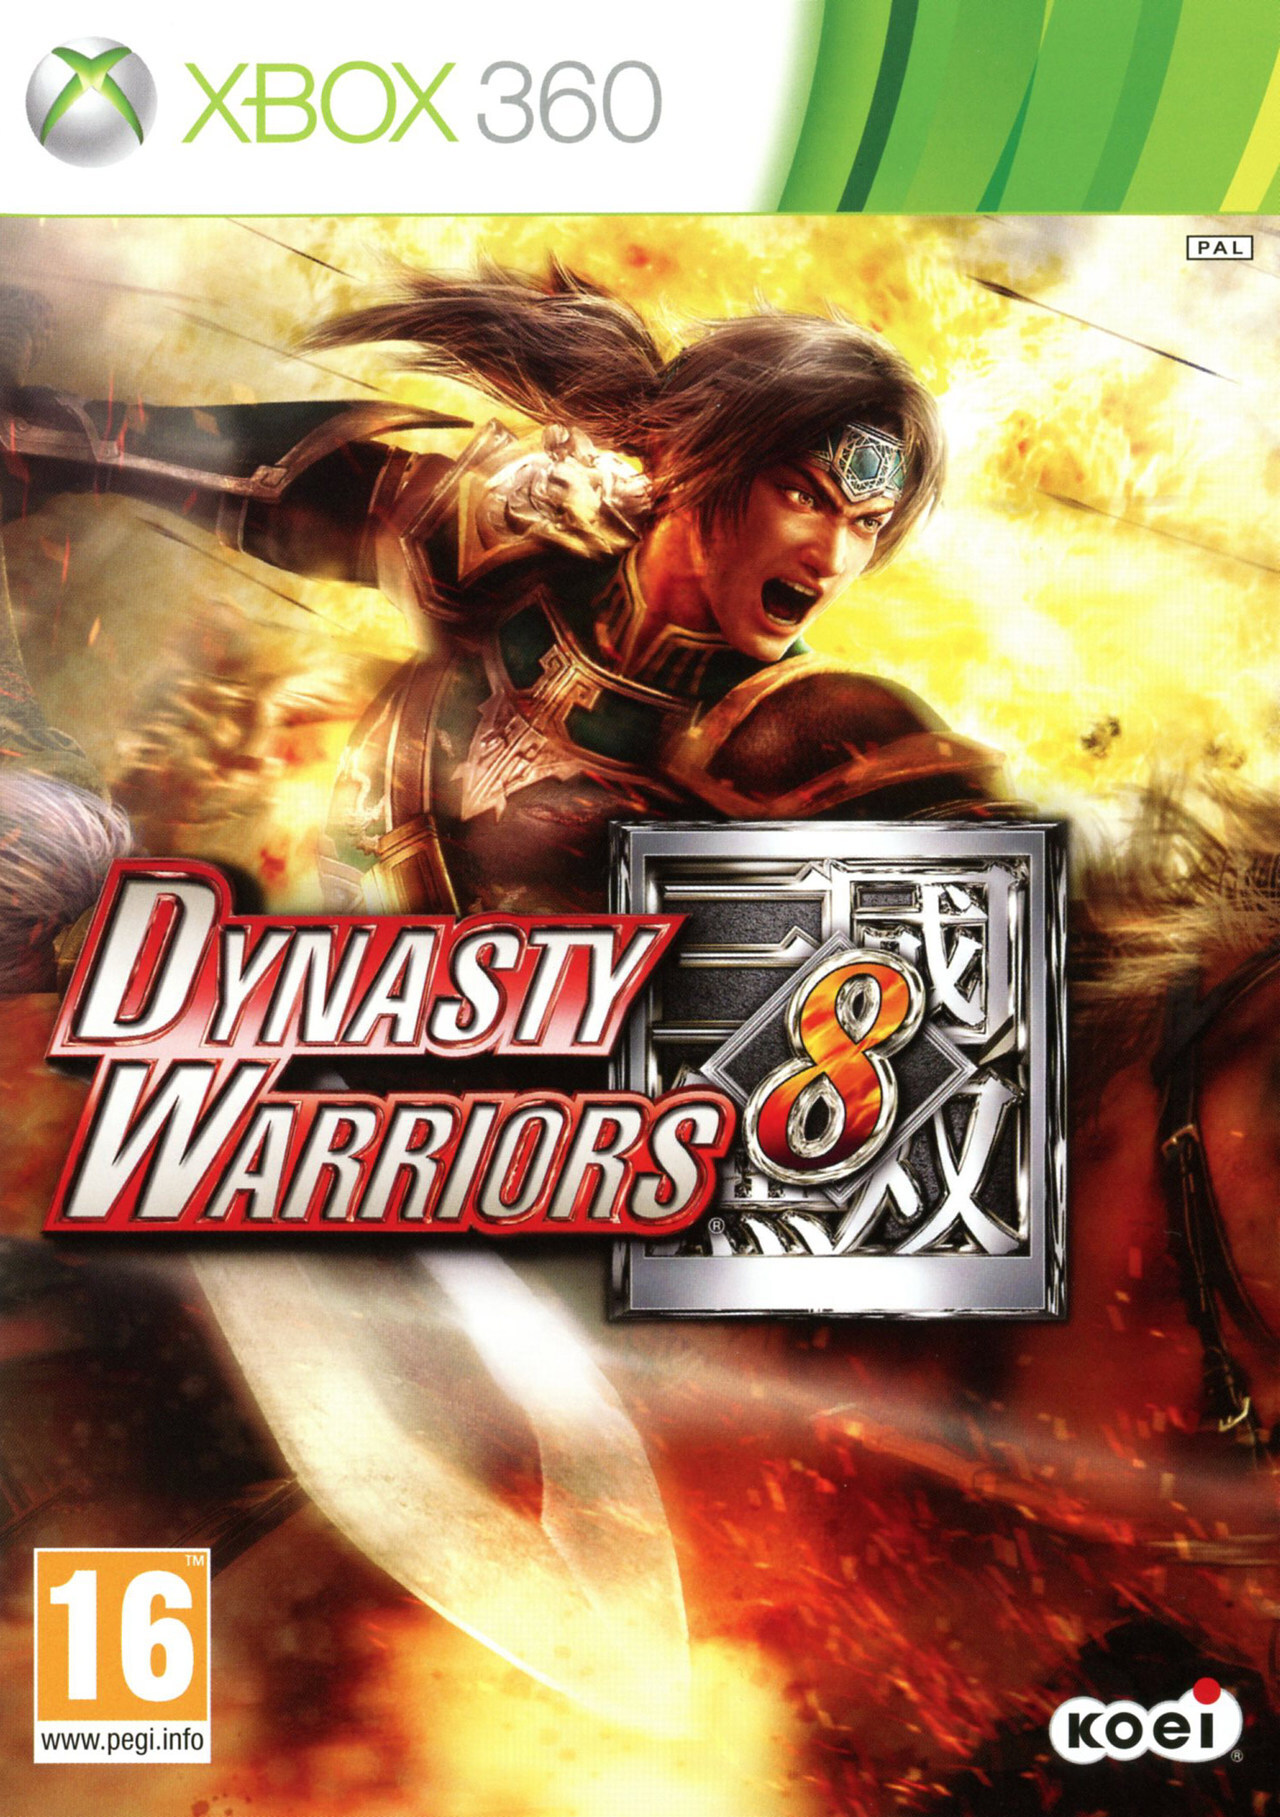 jaquette du jeu vidéo Dynasty Warriors 8